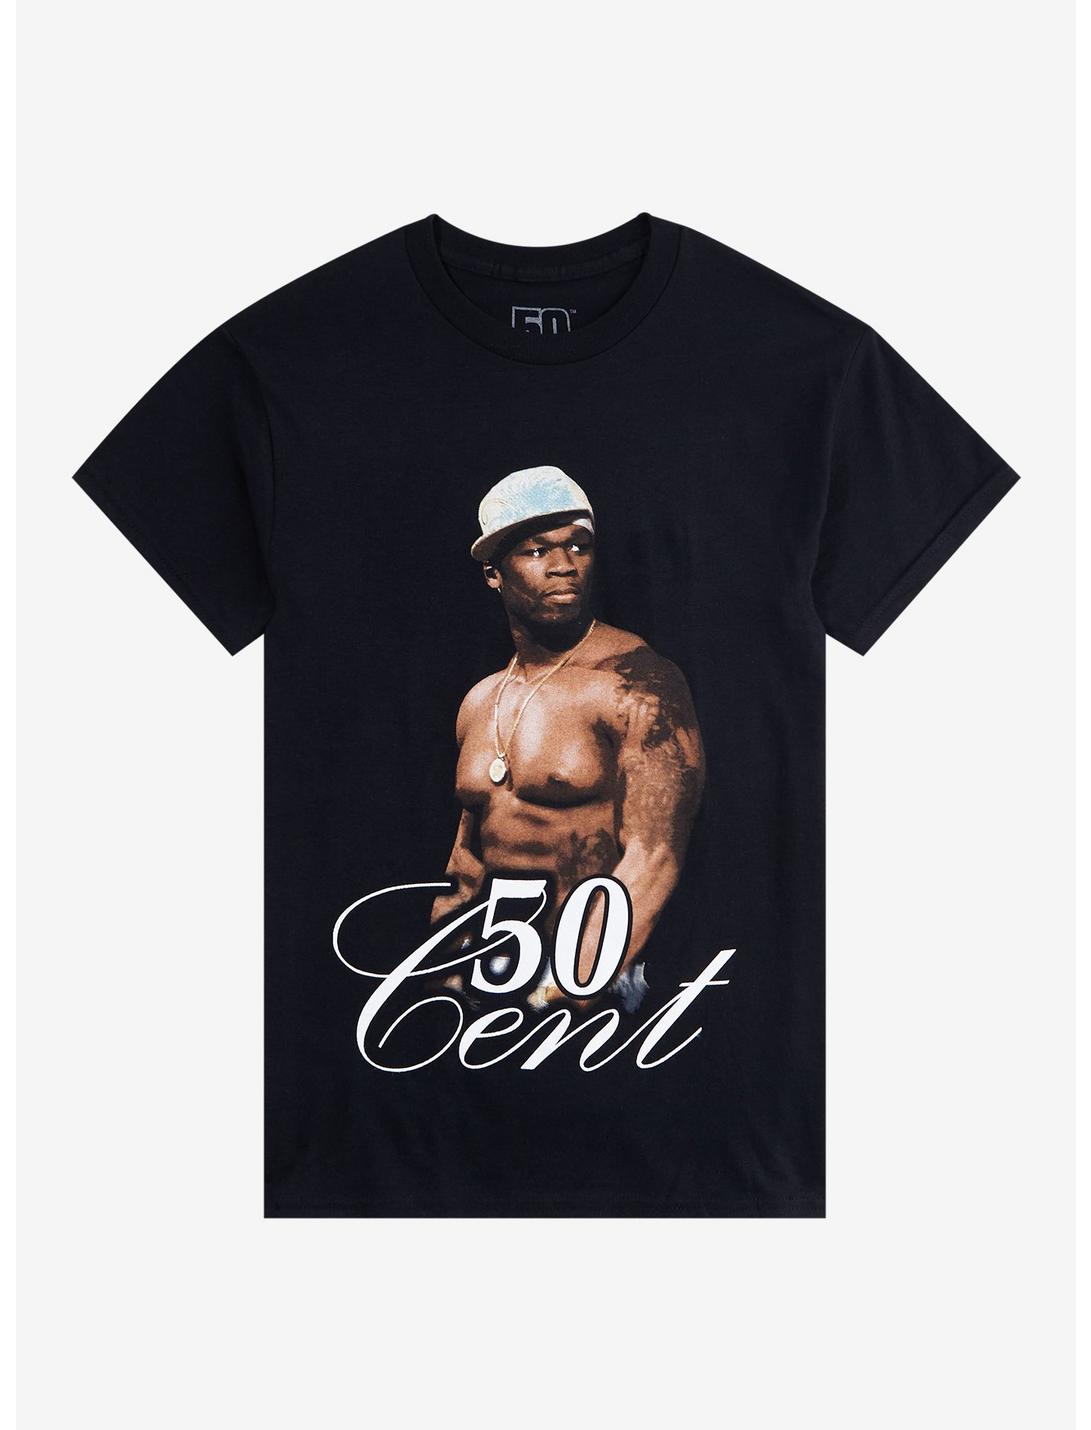 50 Cent Side-Eye Portrait Boyfriend Fit Girls T-Shirt, BLACK, hi-res